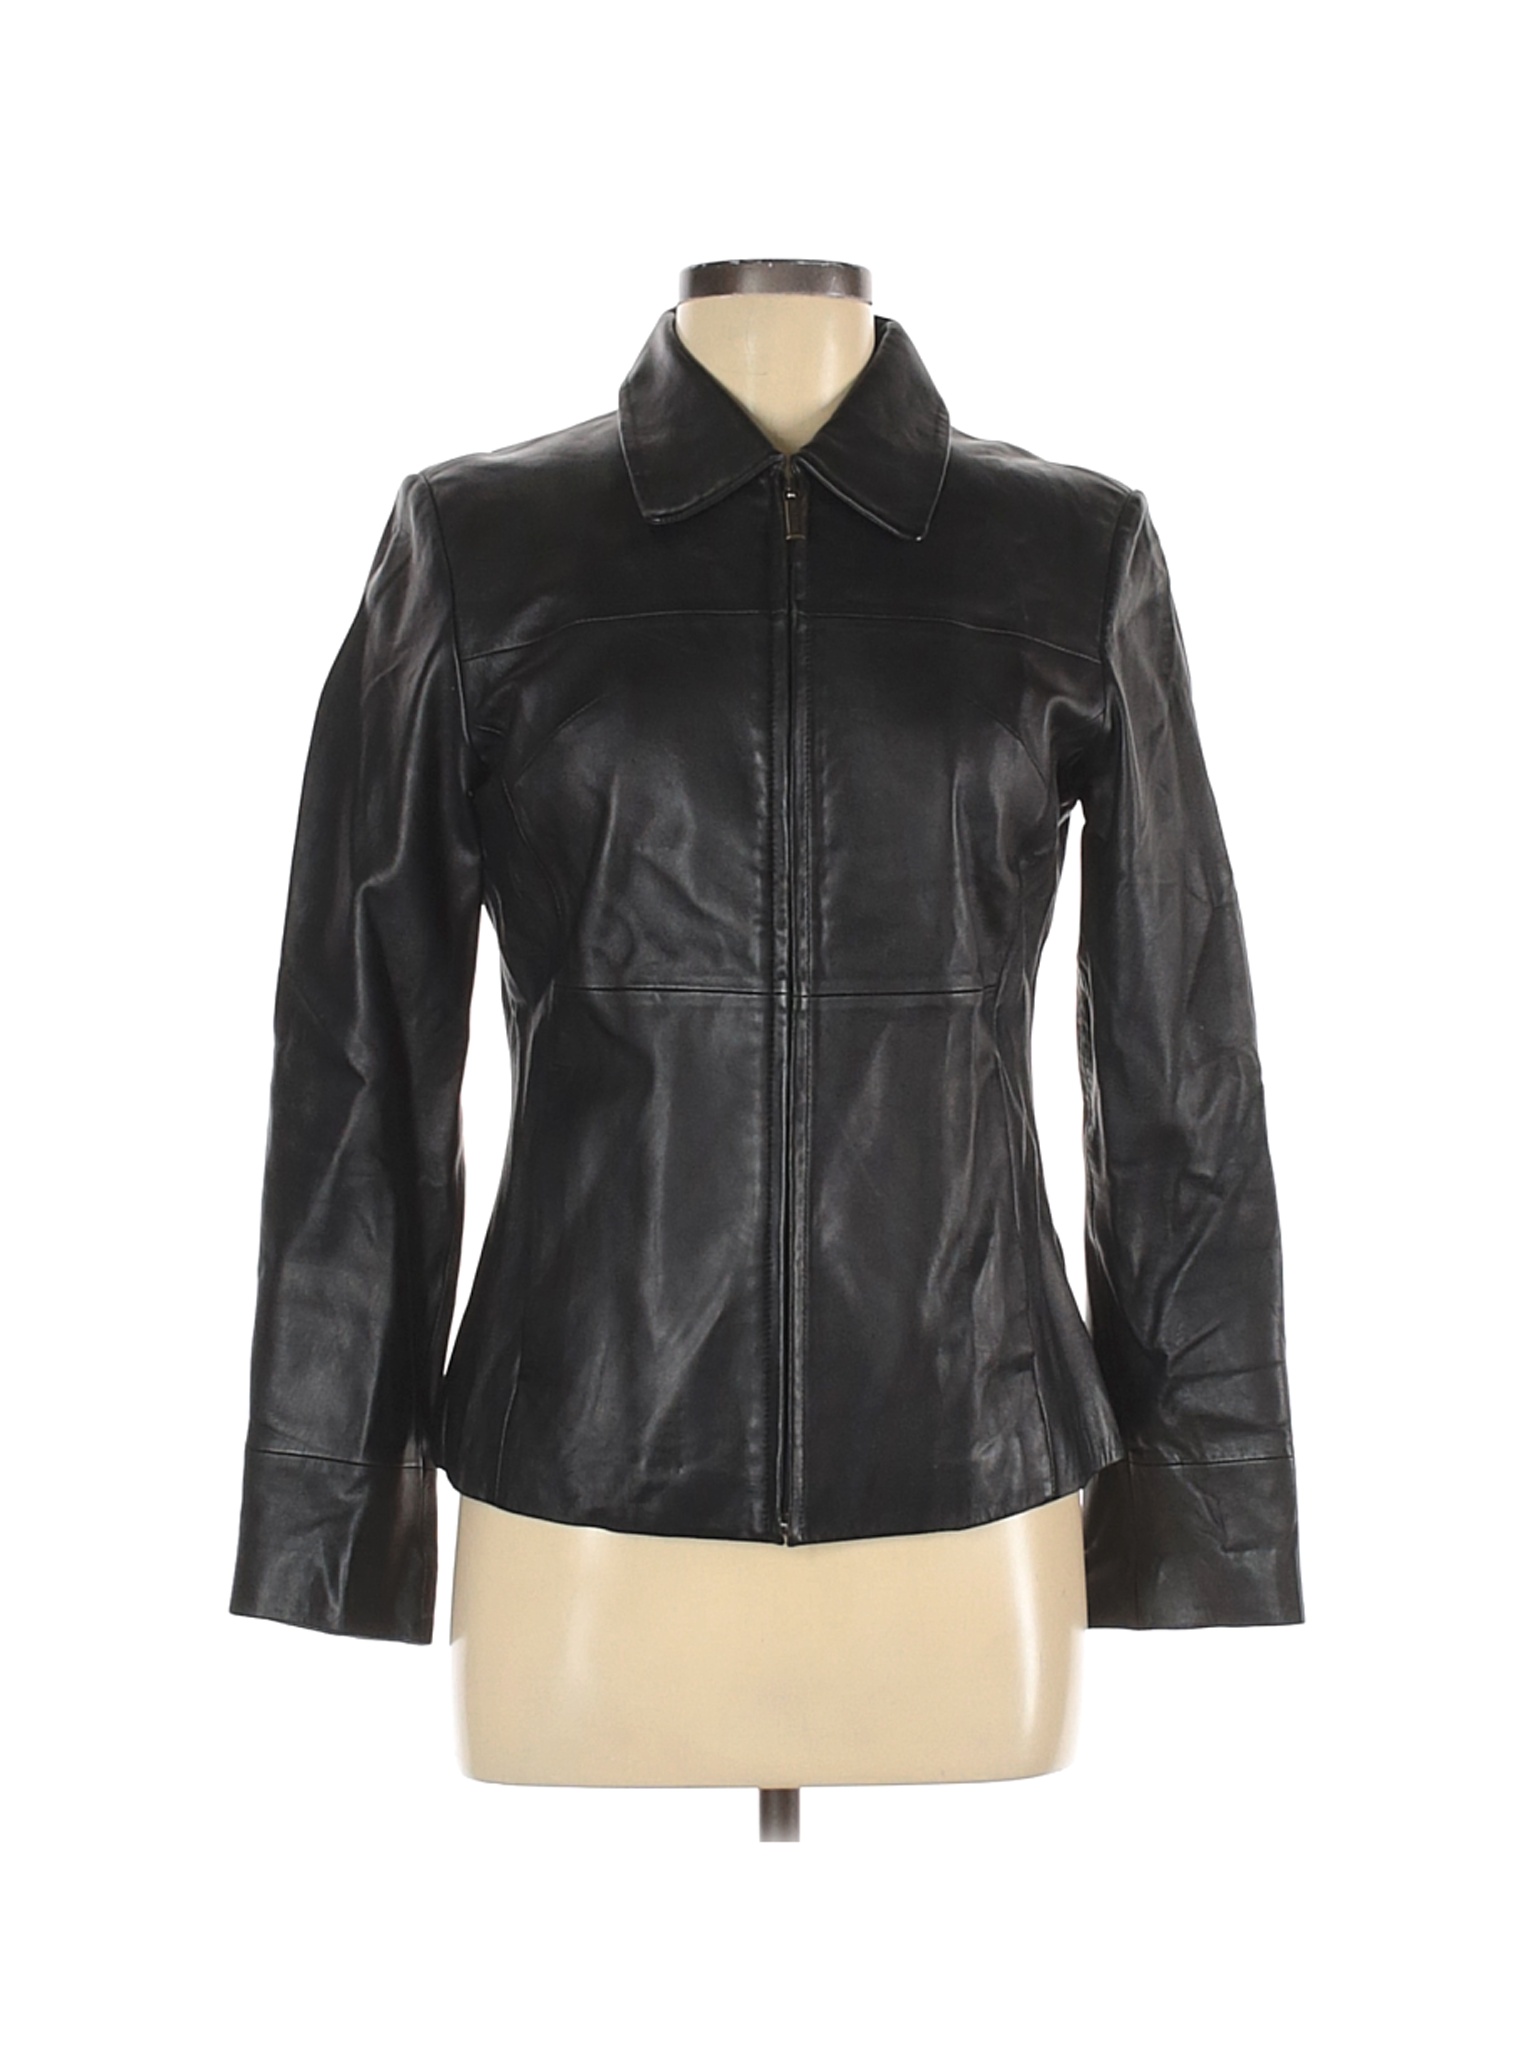 Wilsons Leather Women Black Leather Jacket M | eBay